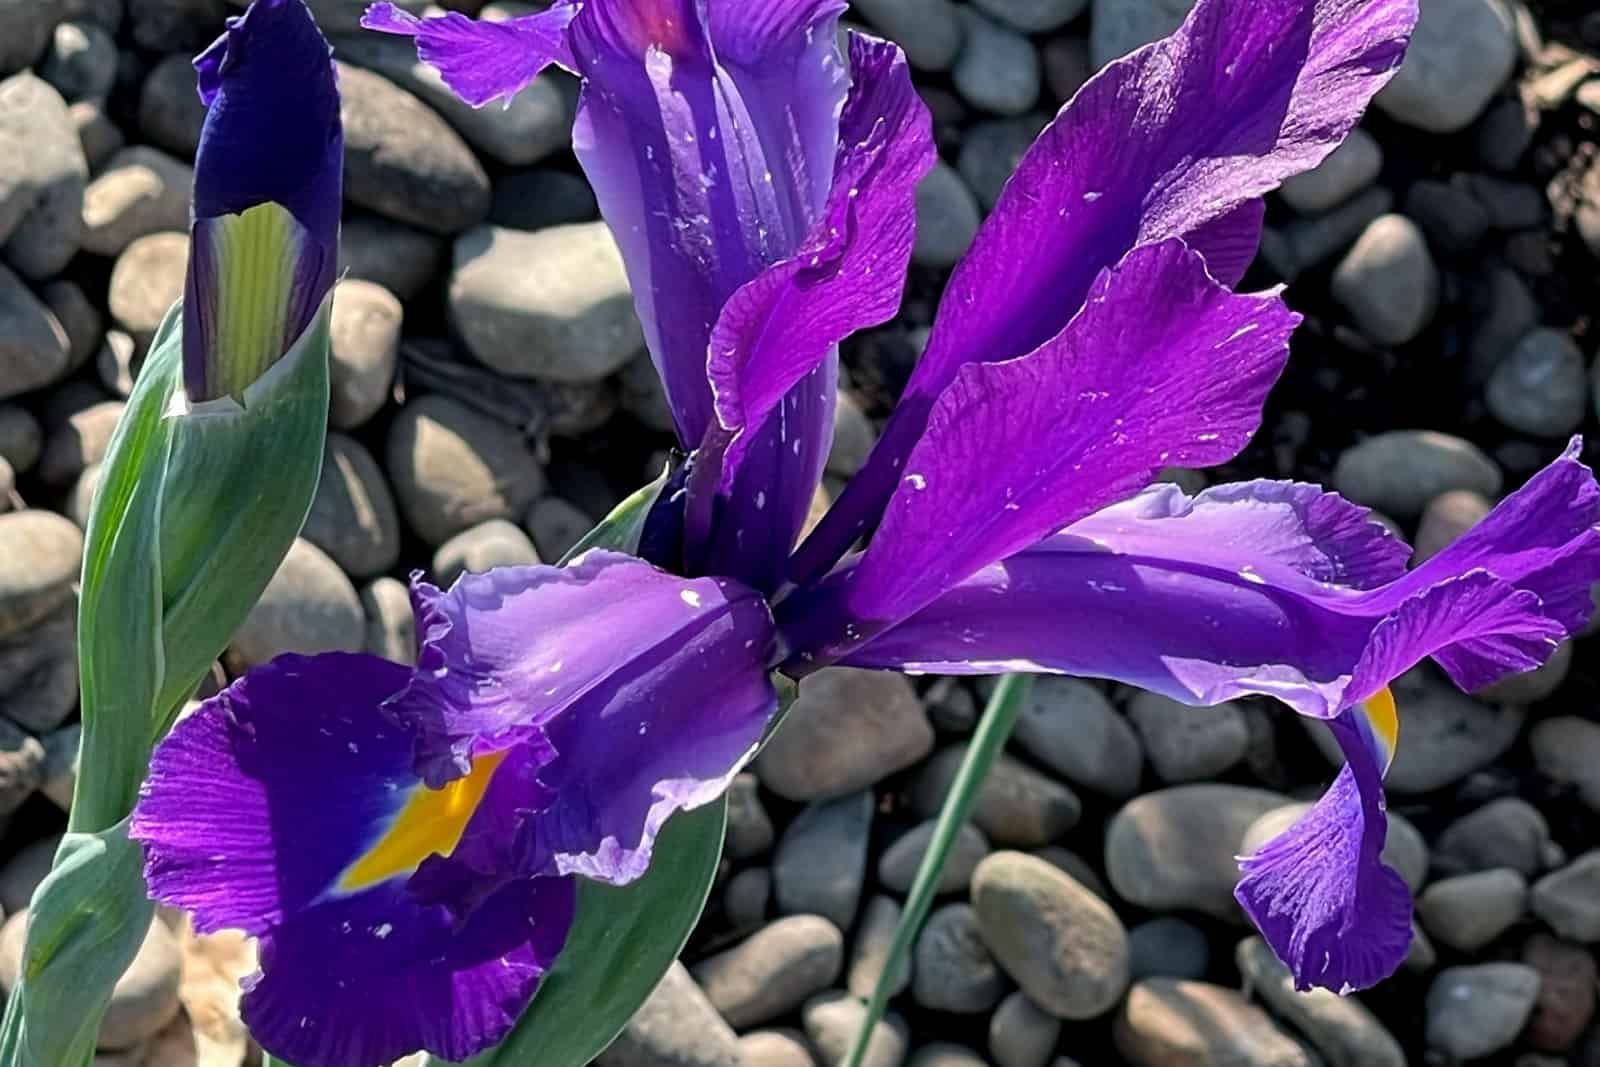 A wild bright purple iris